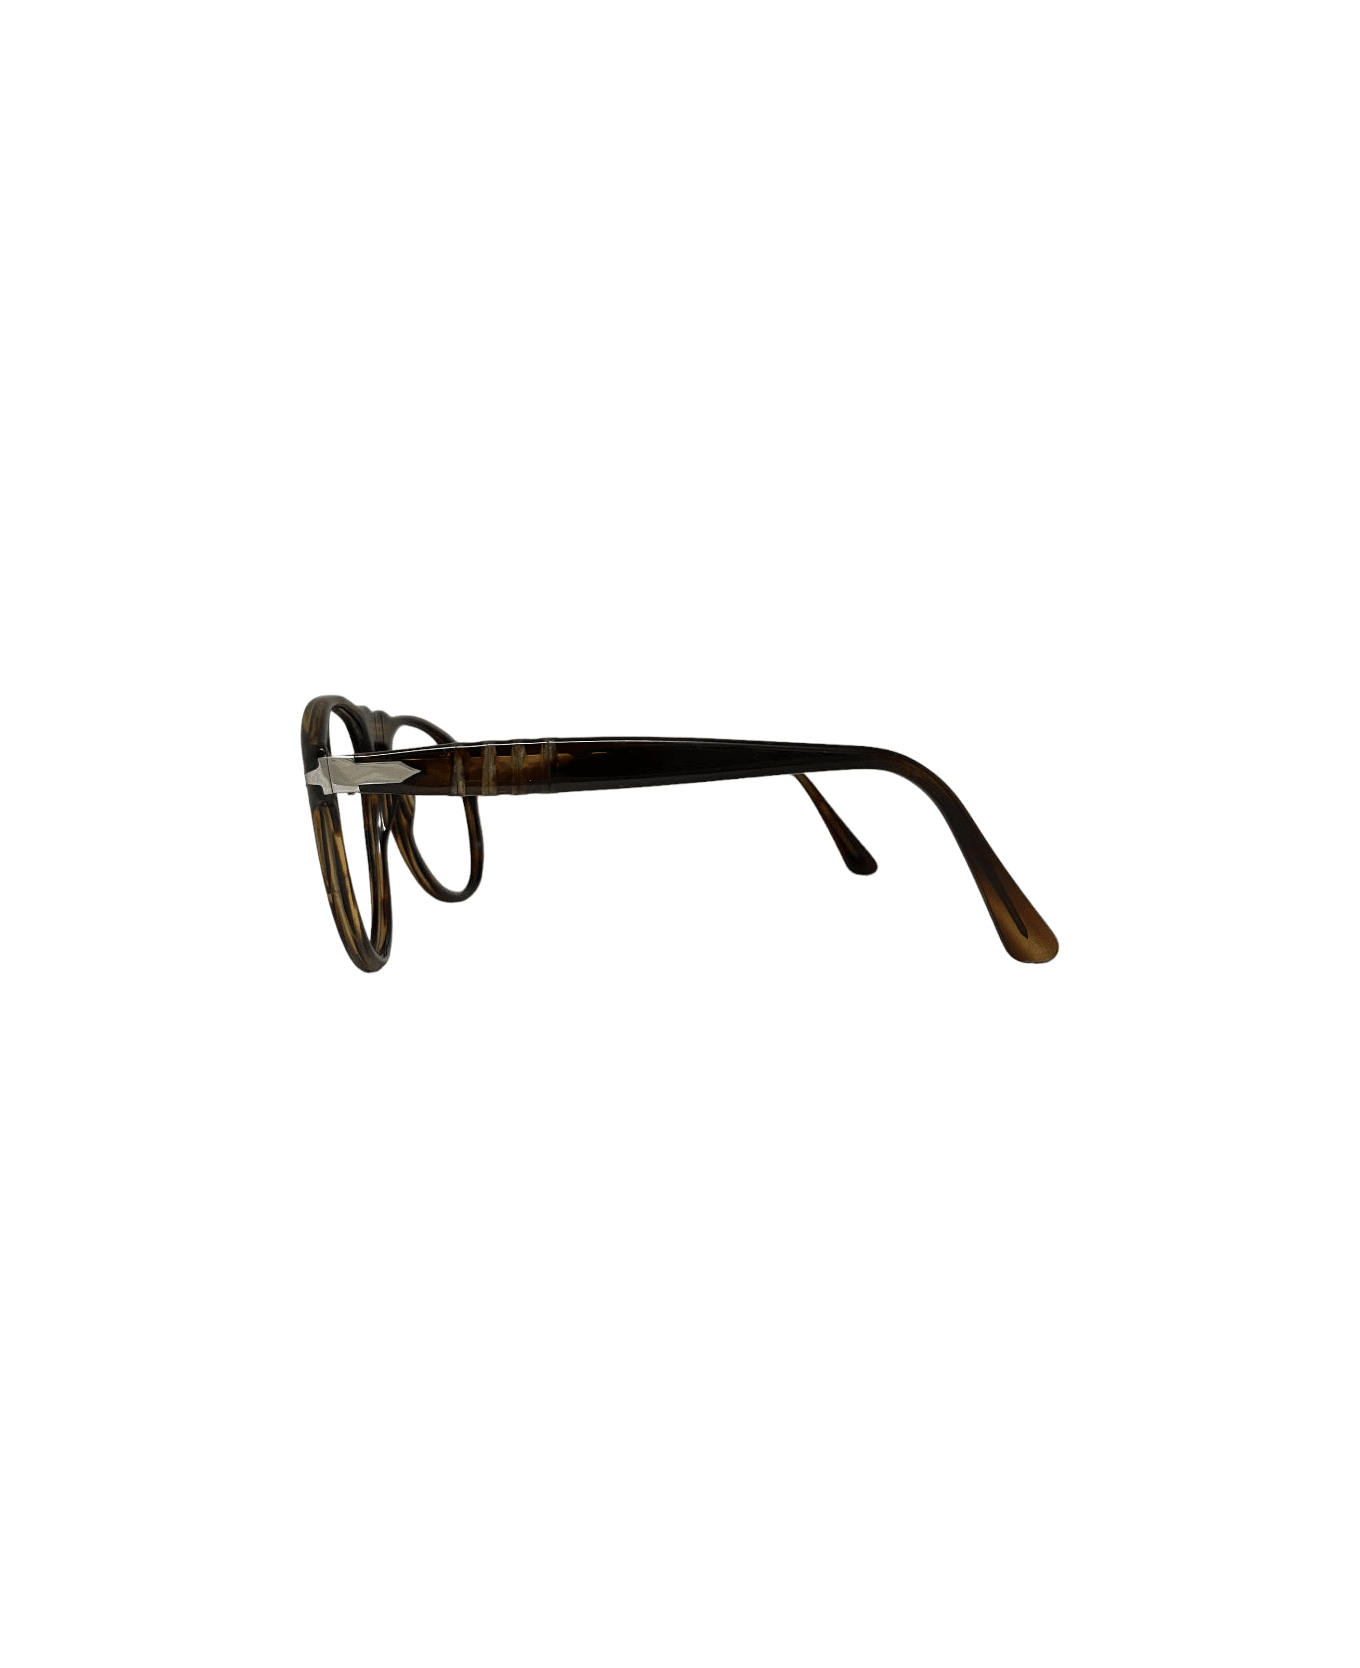 Persol 649 - Havana Sunglasses